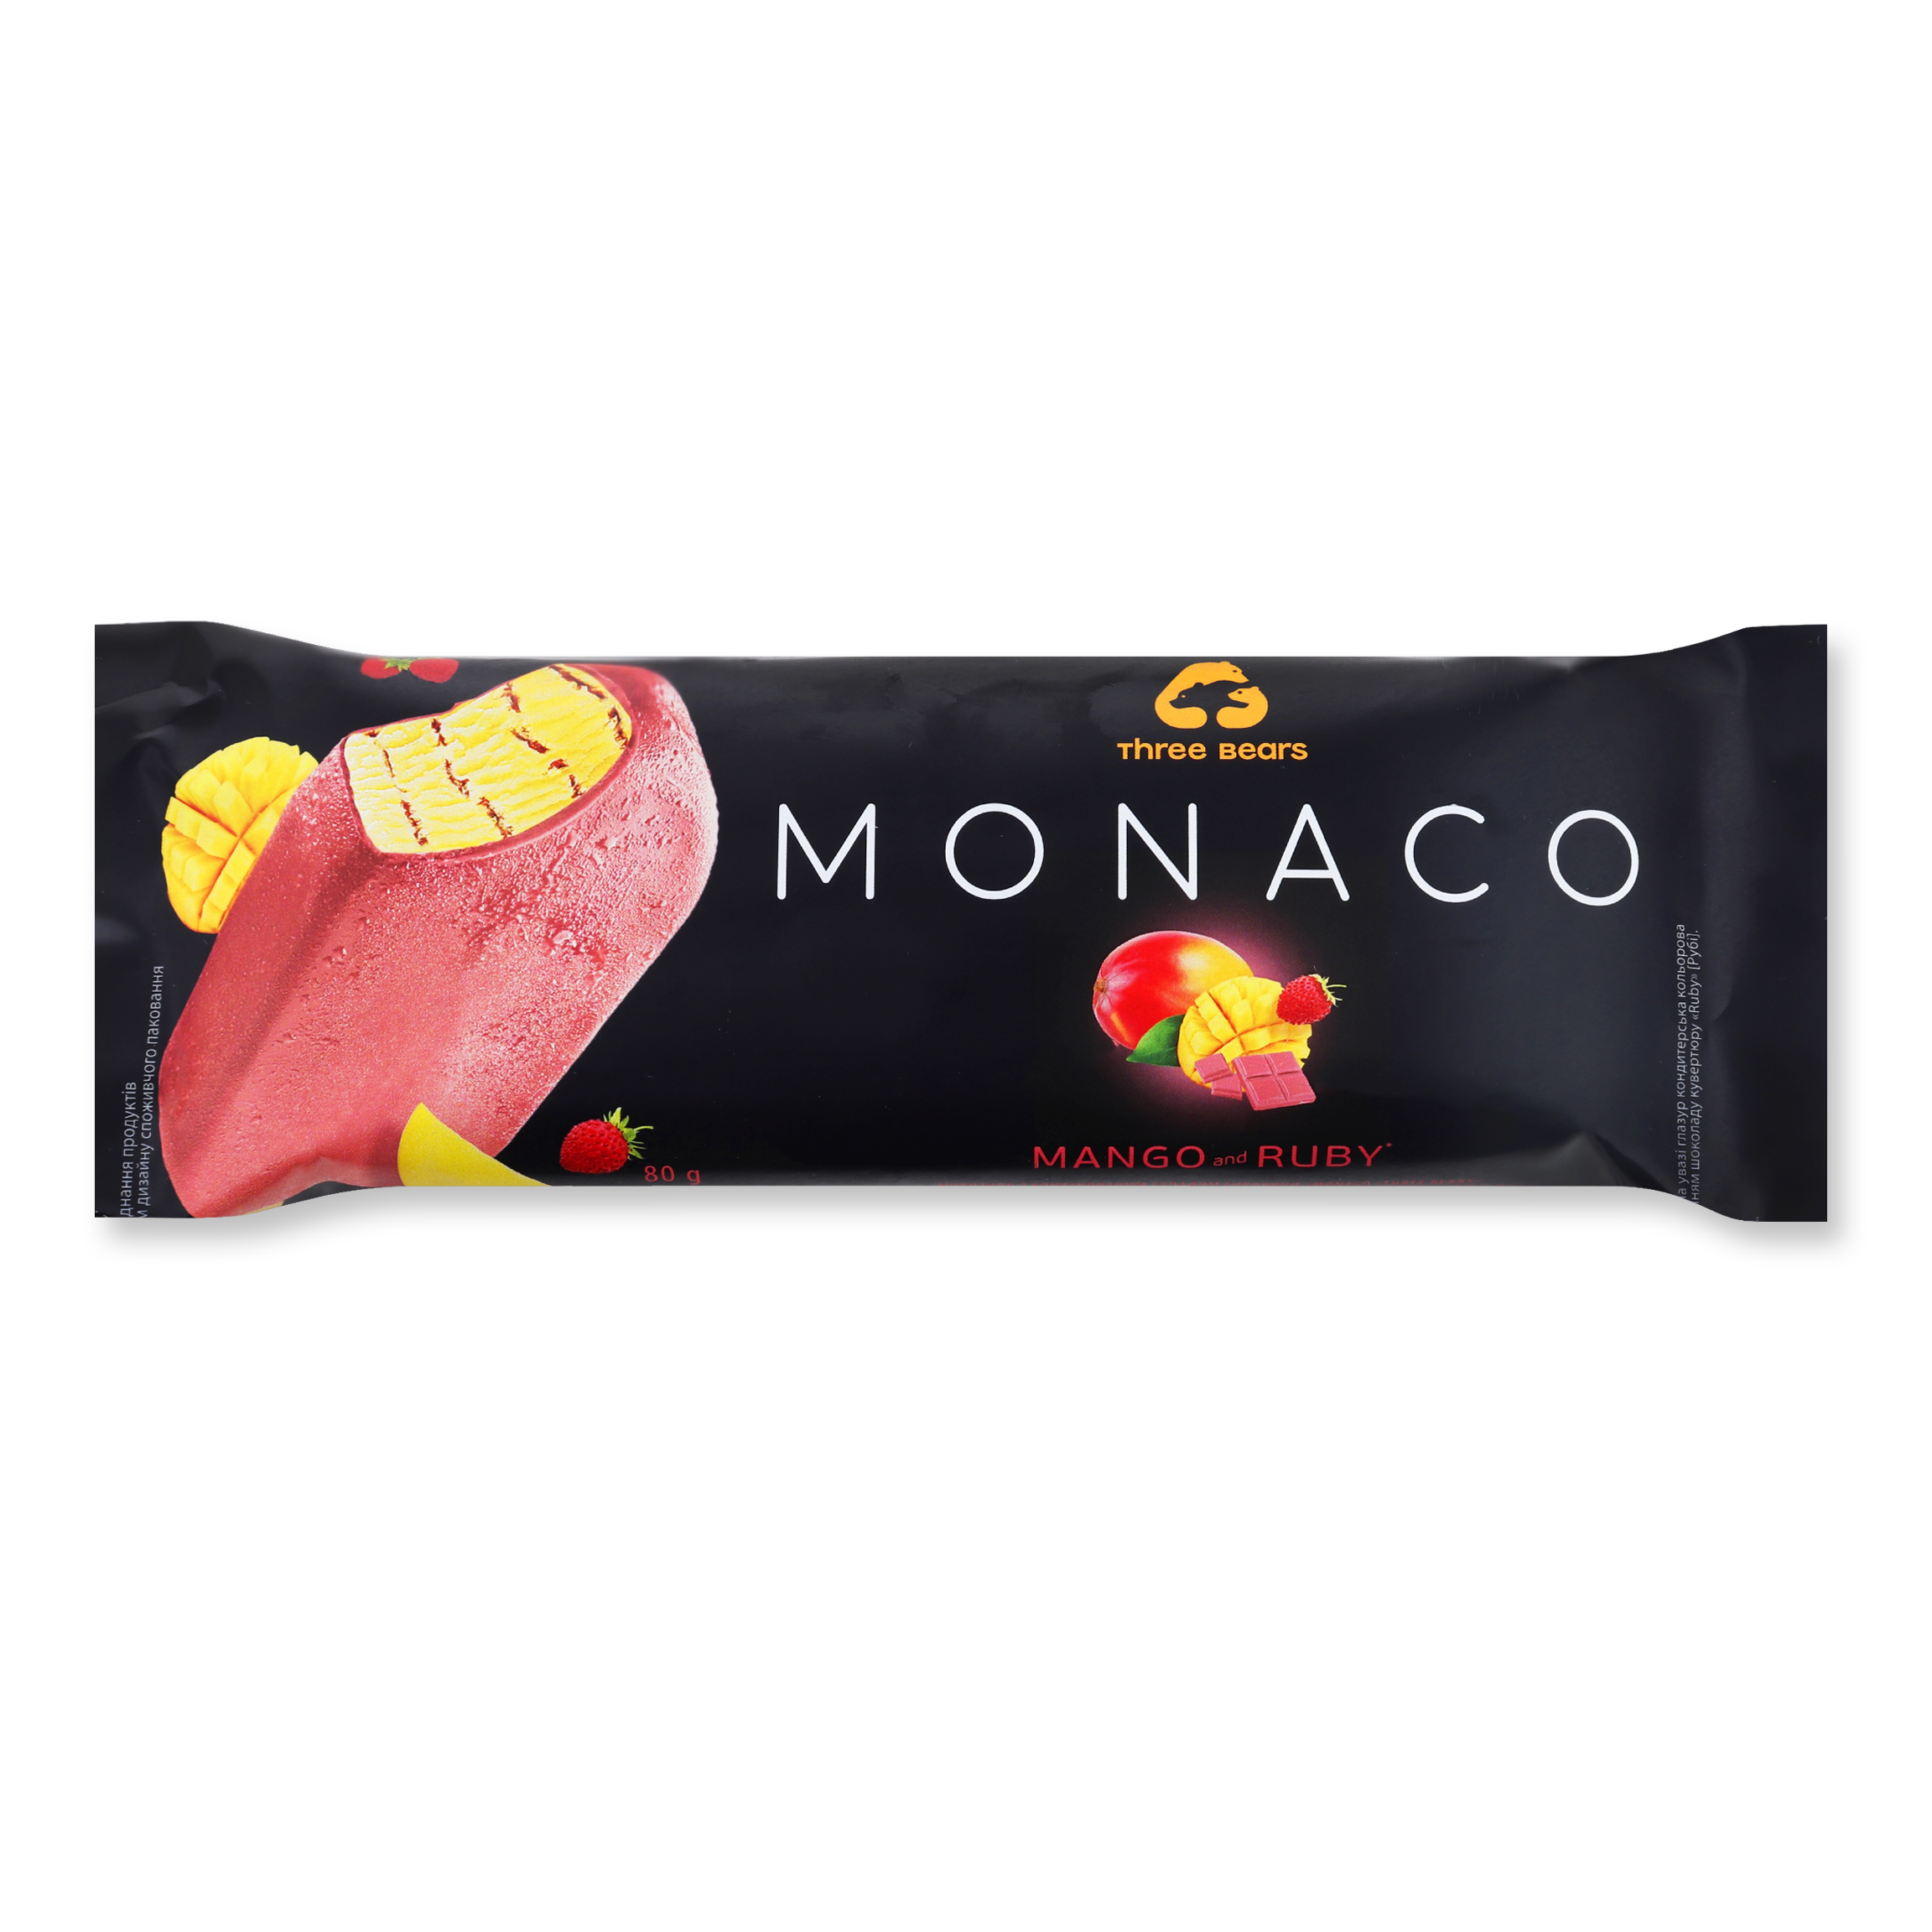 Three Bears Monaco Mango-Ruby Flavored Ice Cream with Glaze Cover 80g